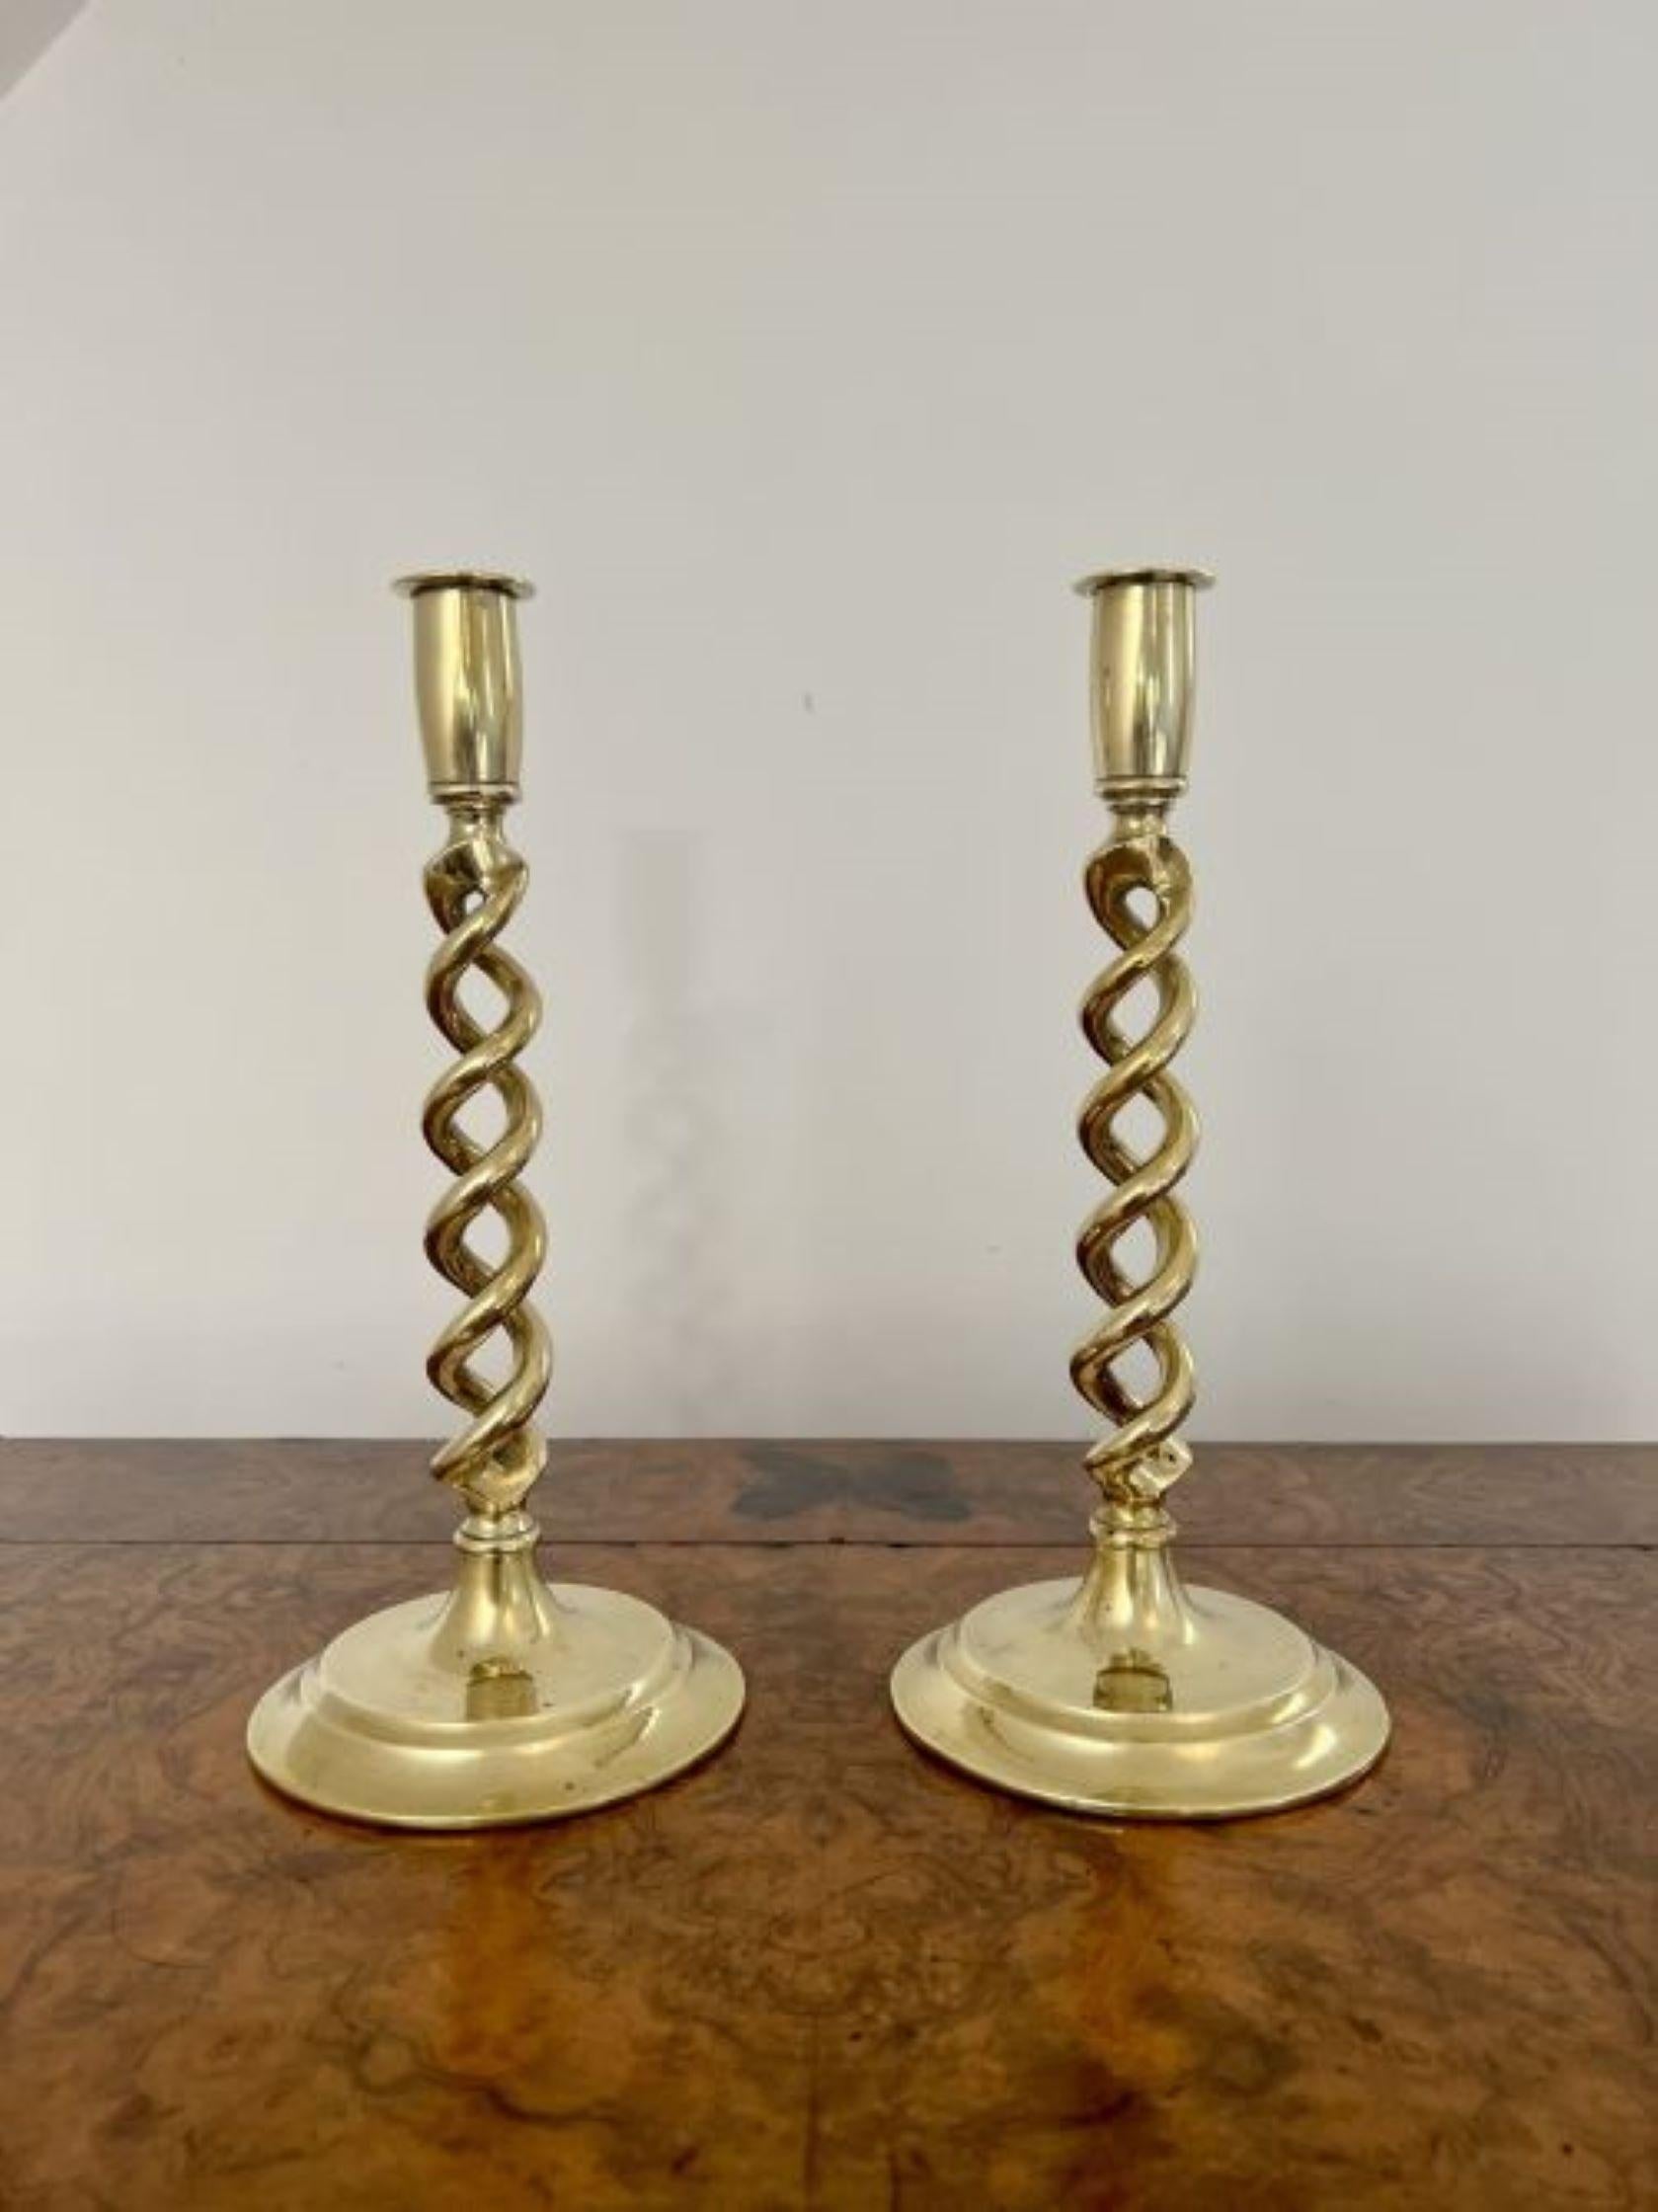 Fantastic quality antique Edwardian brass candlesticks having a quality pair of antique Edwardian barley twist candlesticks standing on a circular base.
